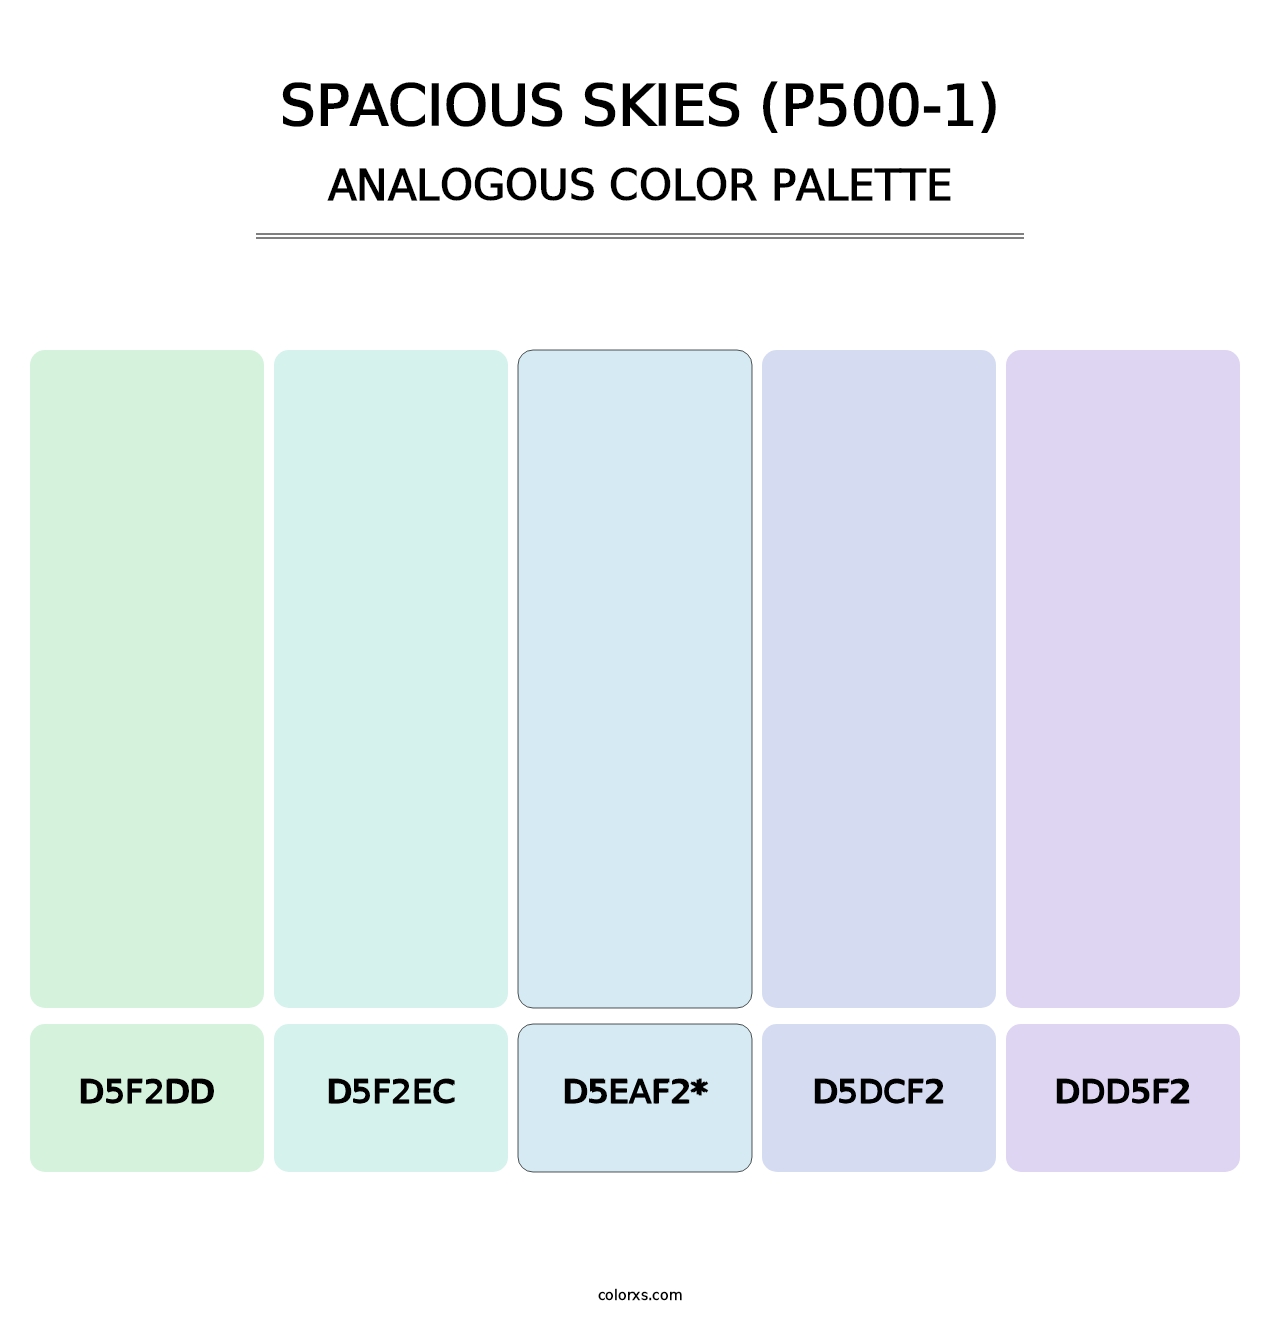 Spacious Skies (P500-1) - Analogous Color Palette